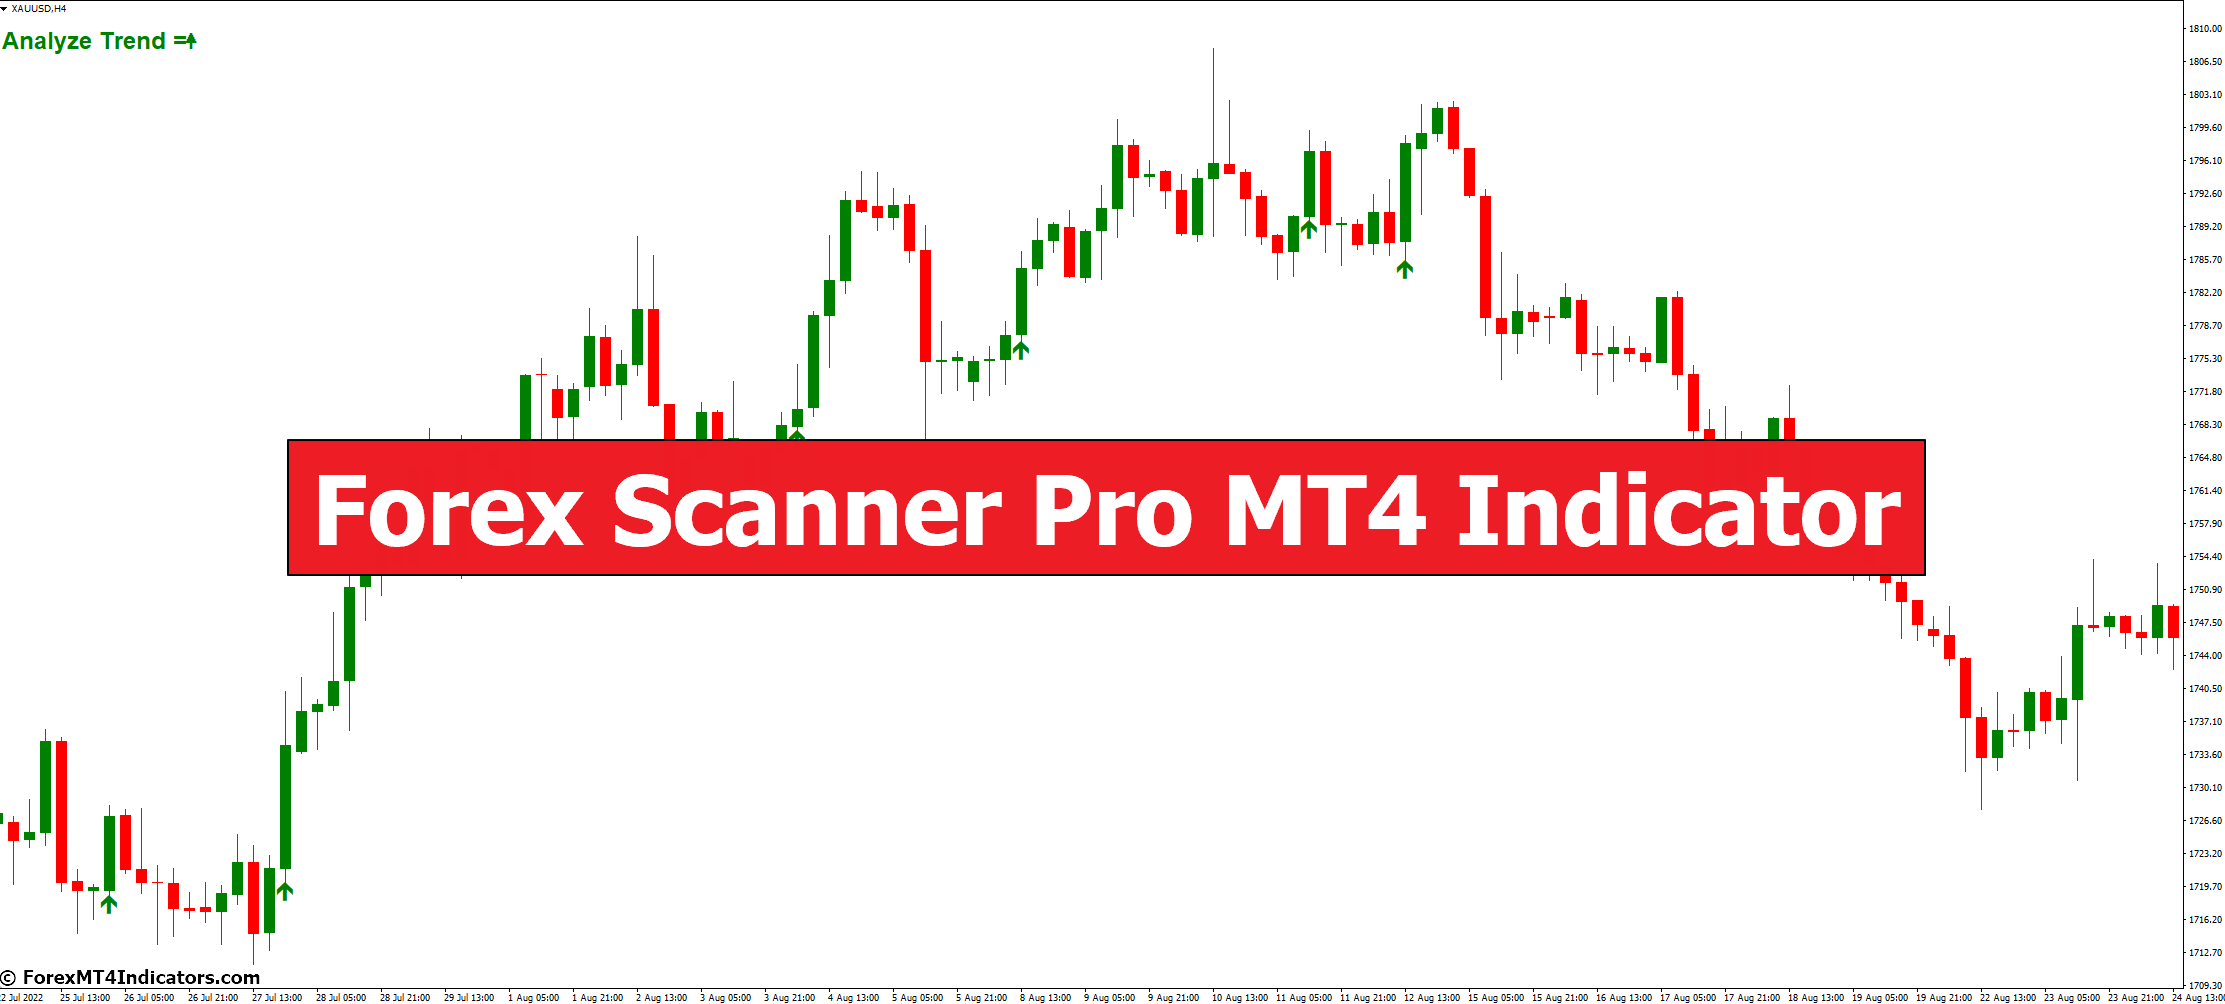 Forex Scanner Pro MT4 Indicator